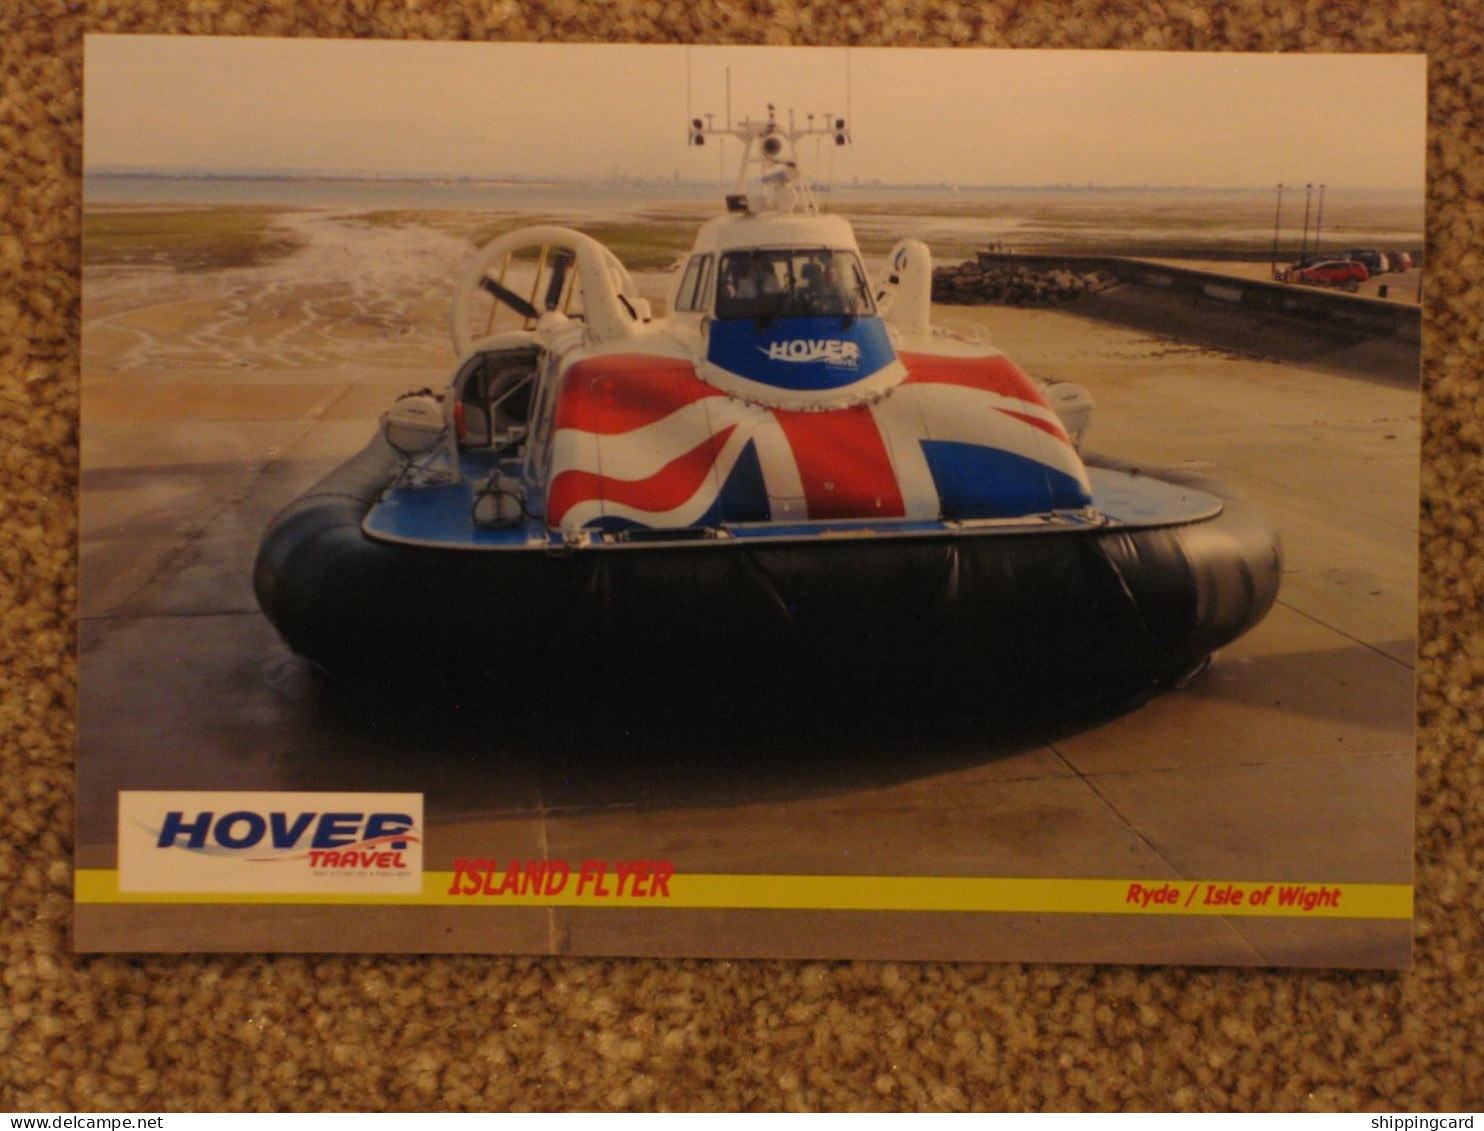 HOVERTRAVEL ISLAND FLYER - Hovercraft